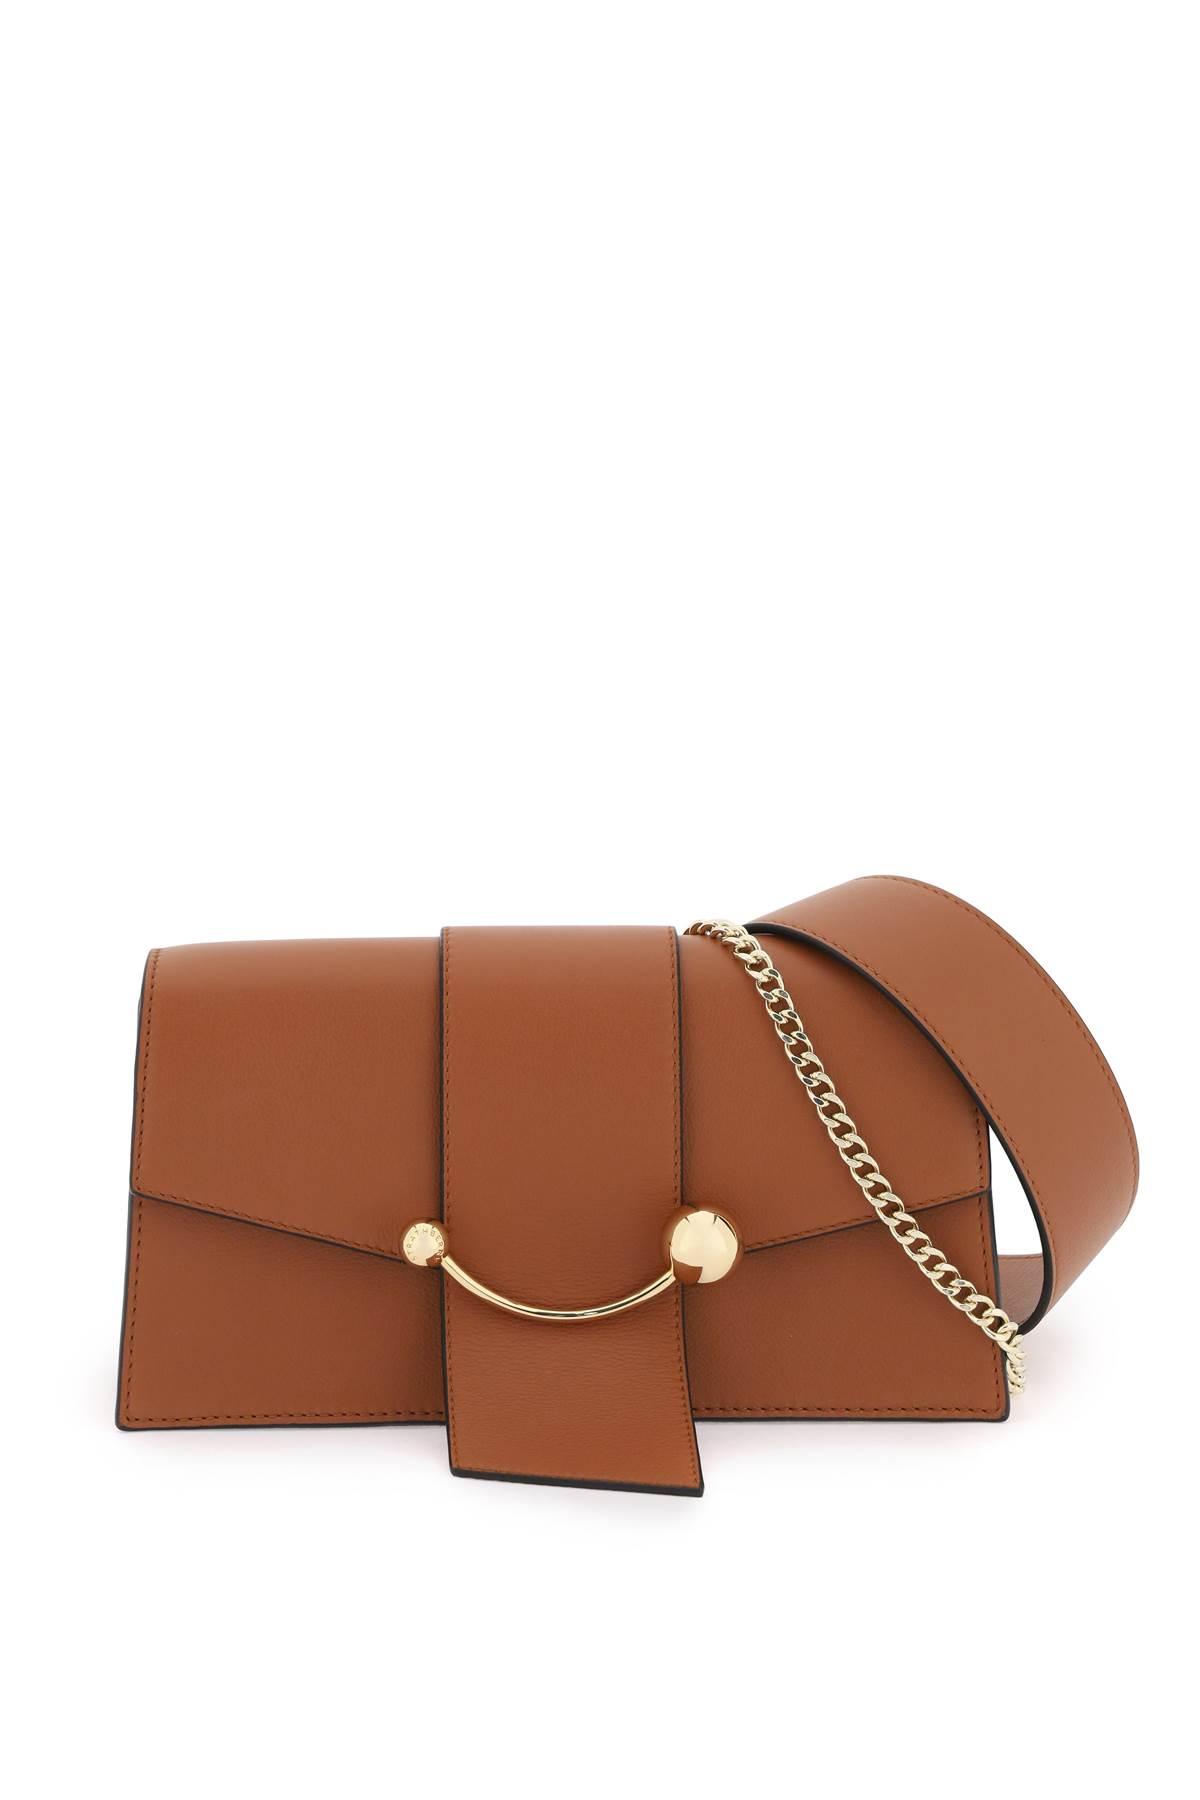 Strathberry Leather Box Crescent Shoulder Bag